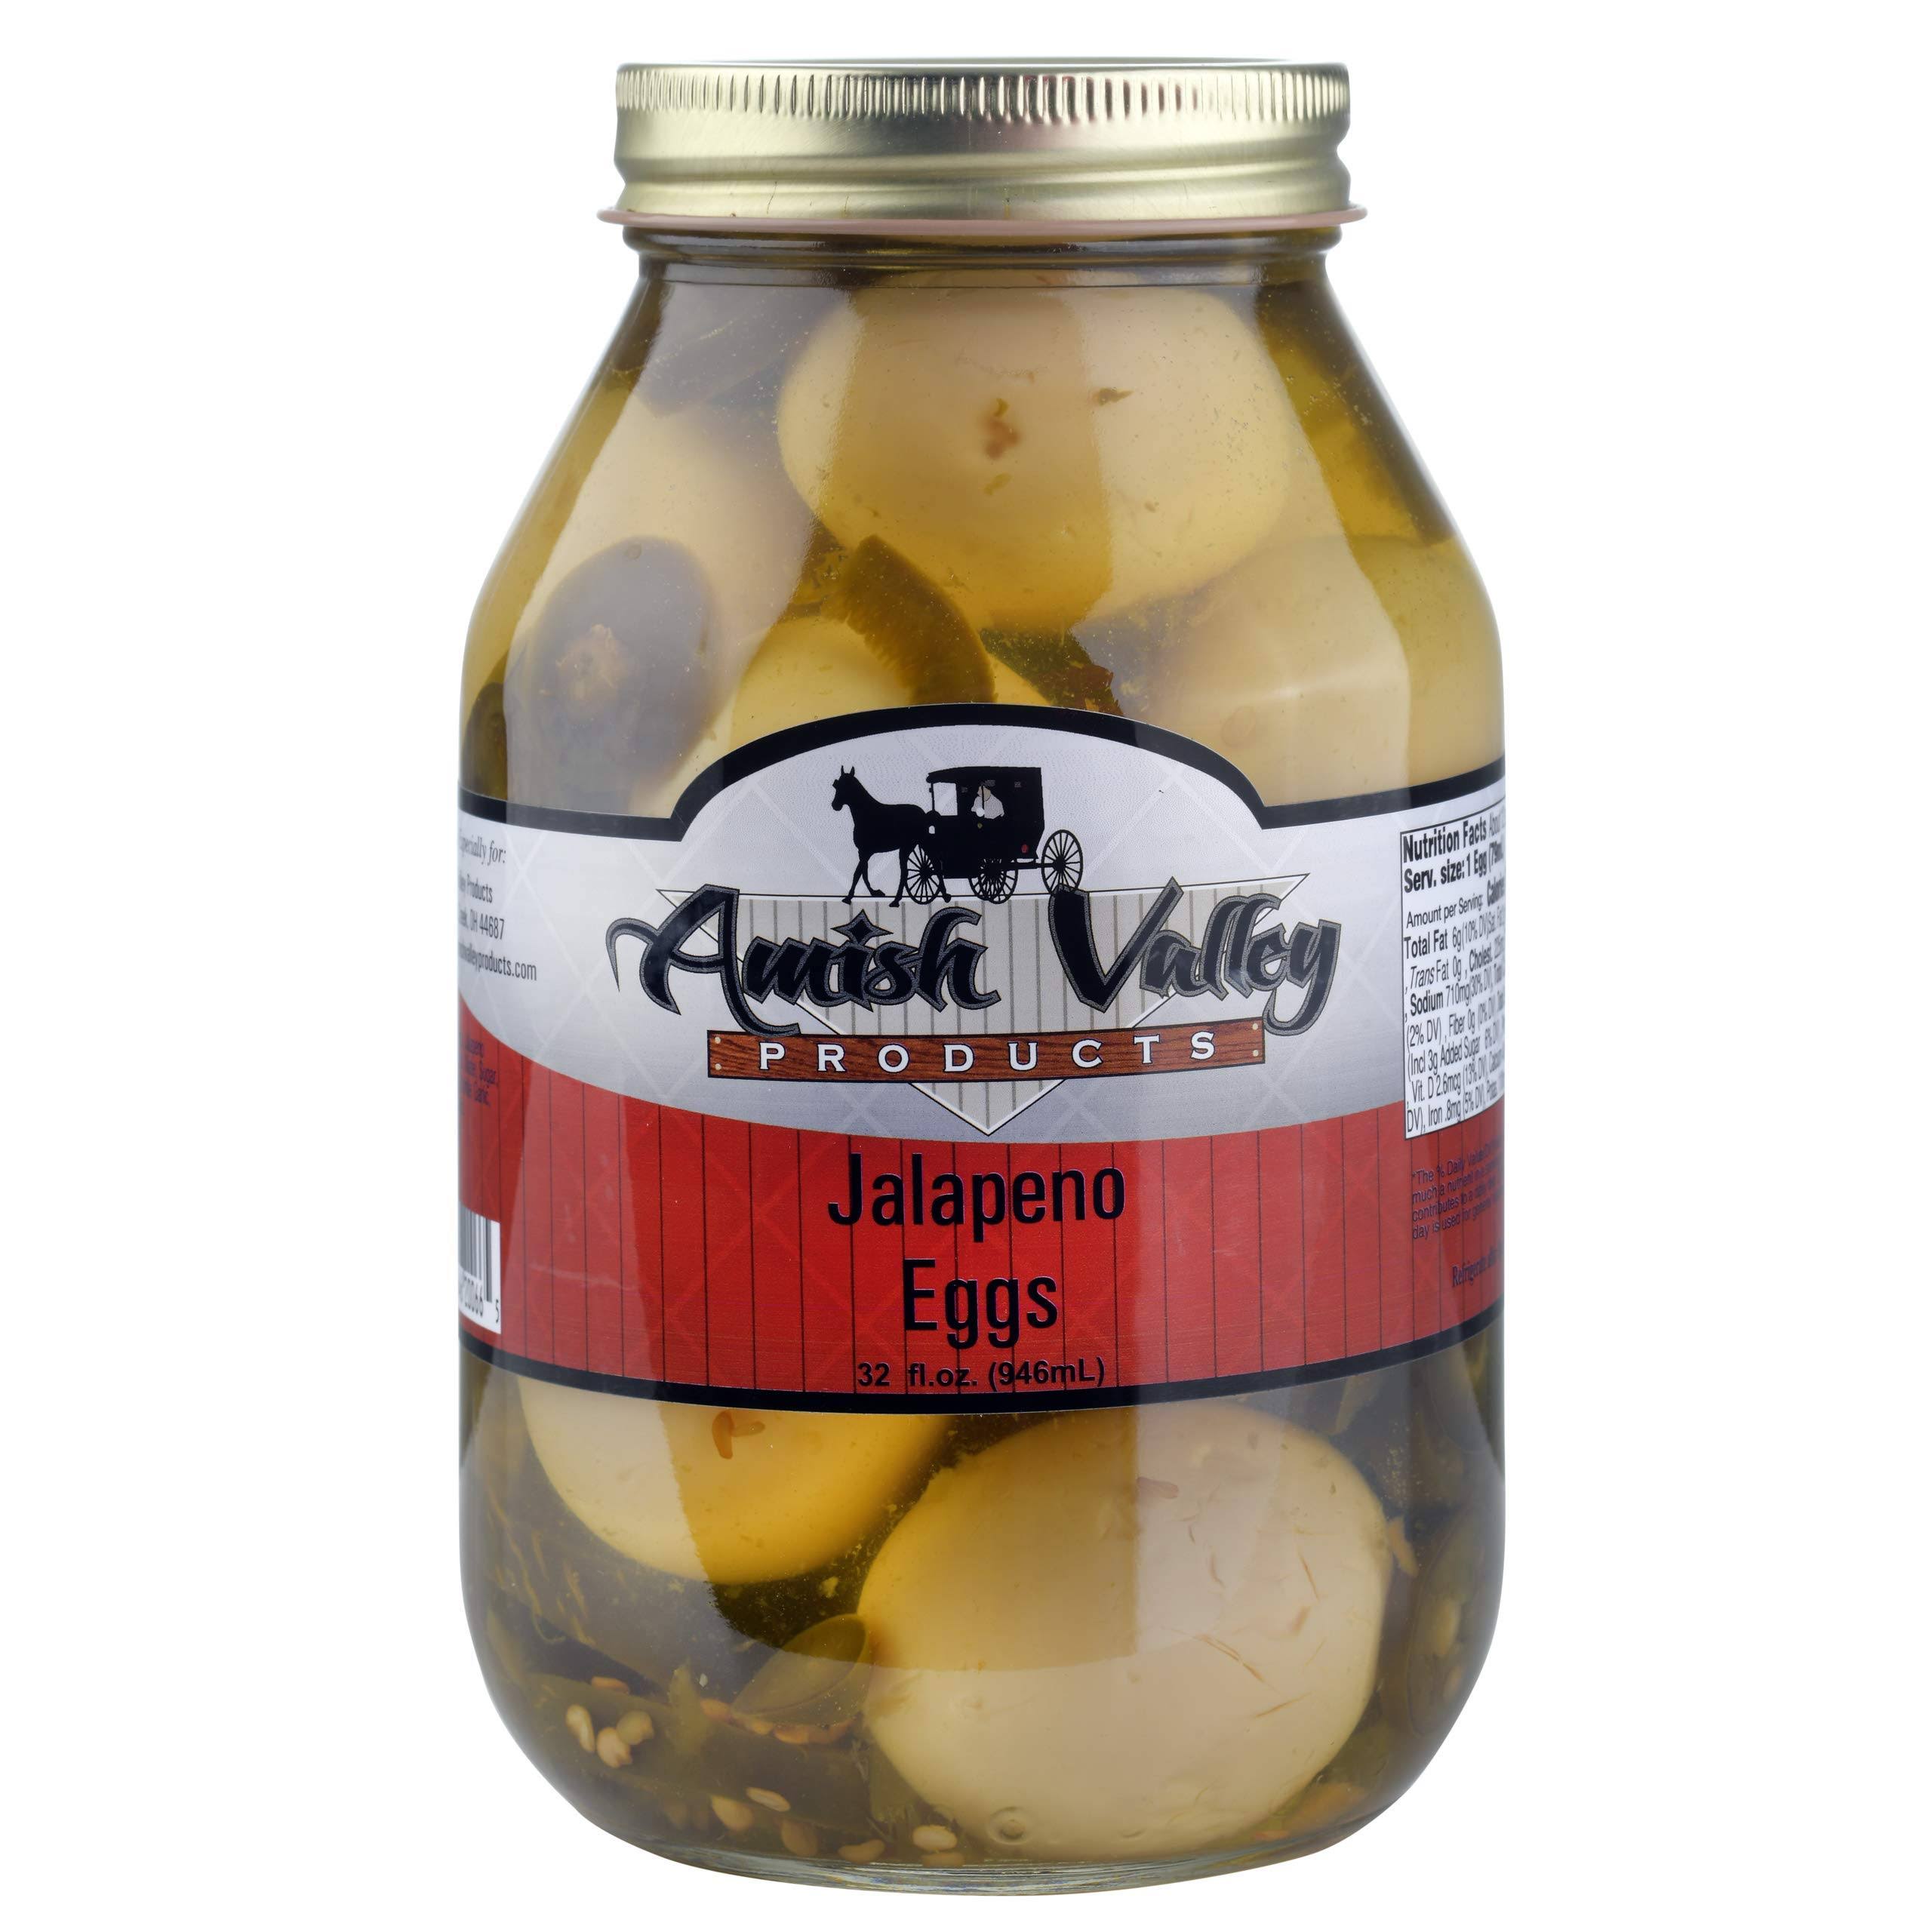 Amish Valley Products Jalapeno Eggs Quart Glass Jar (2 qt Jars - 32 oz)